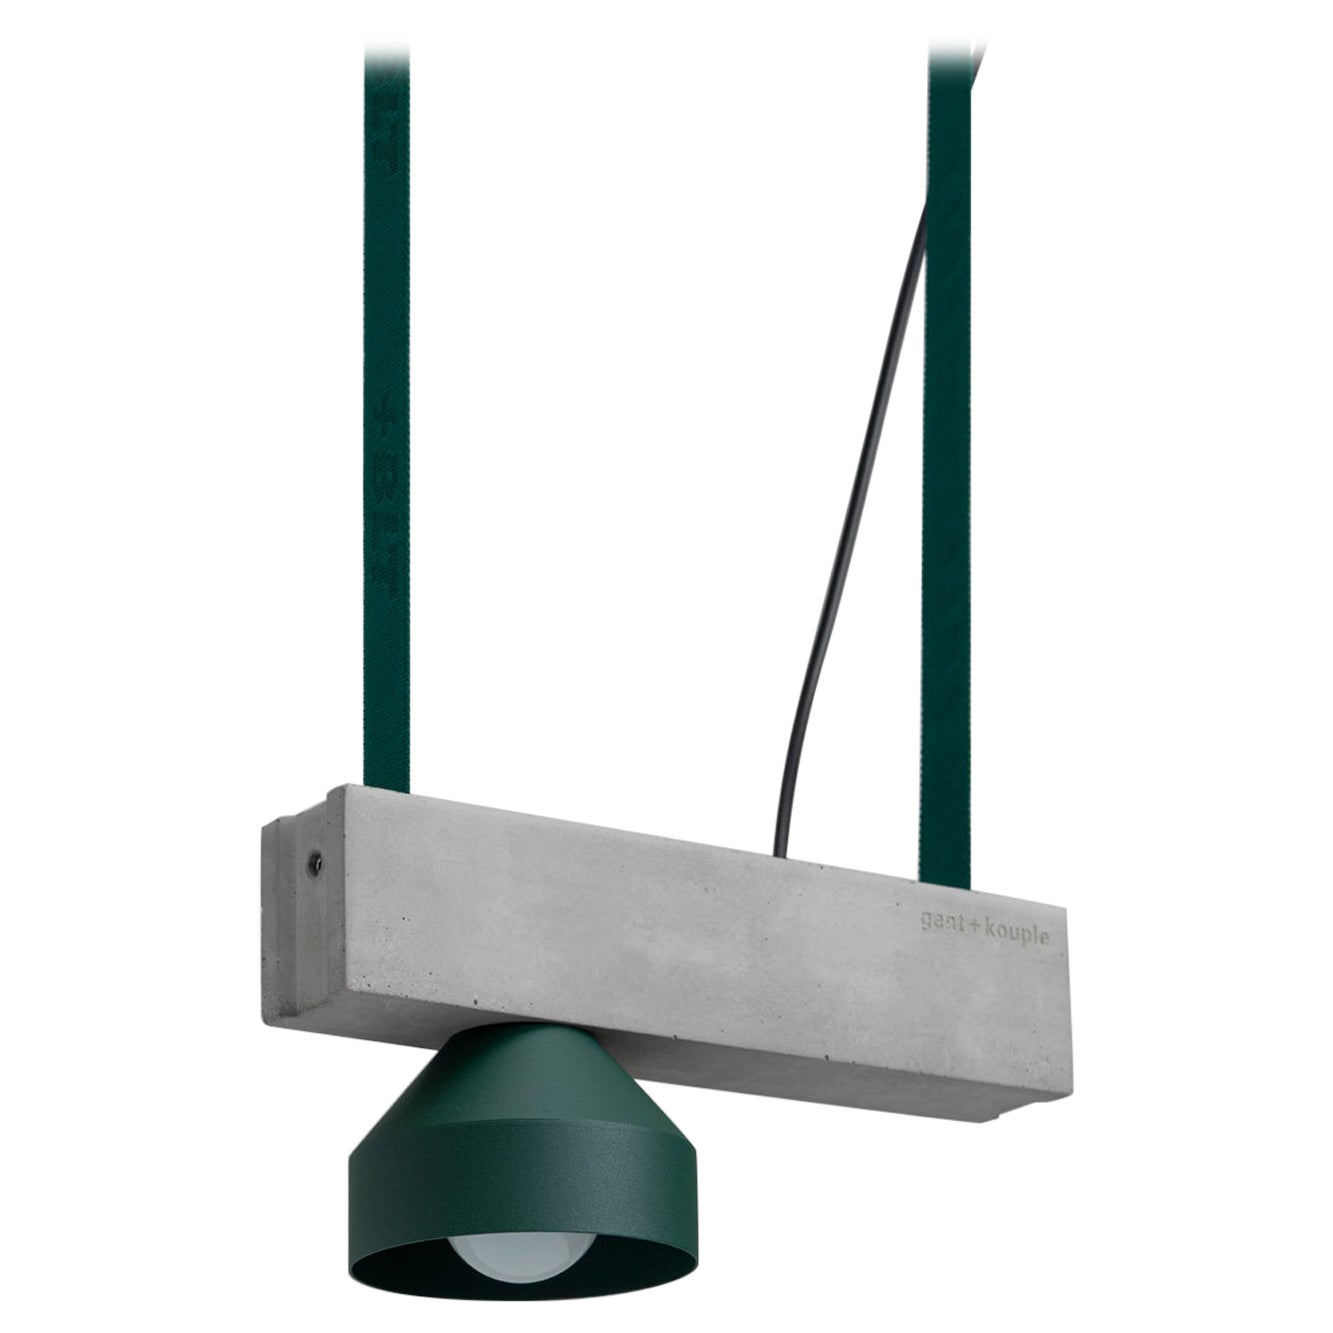 Green Block Pendant Lamp by +kouple